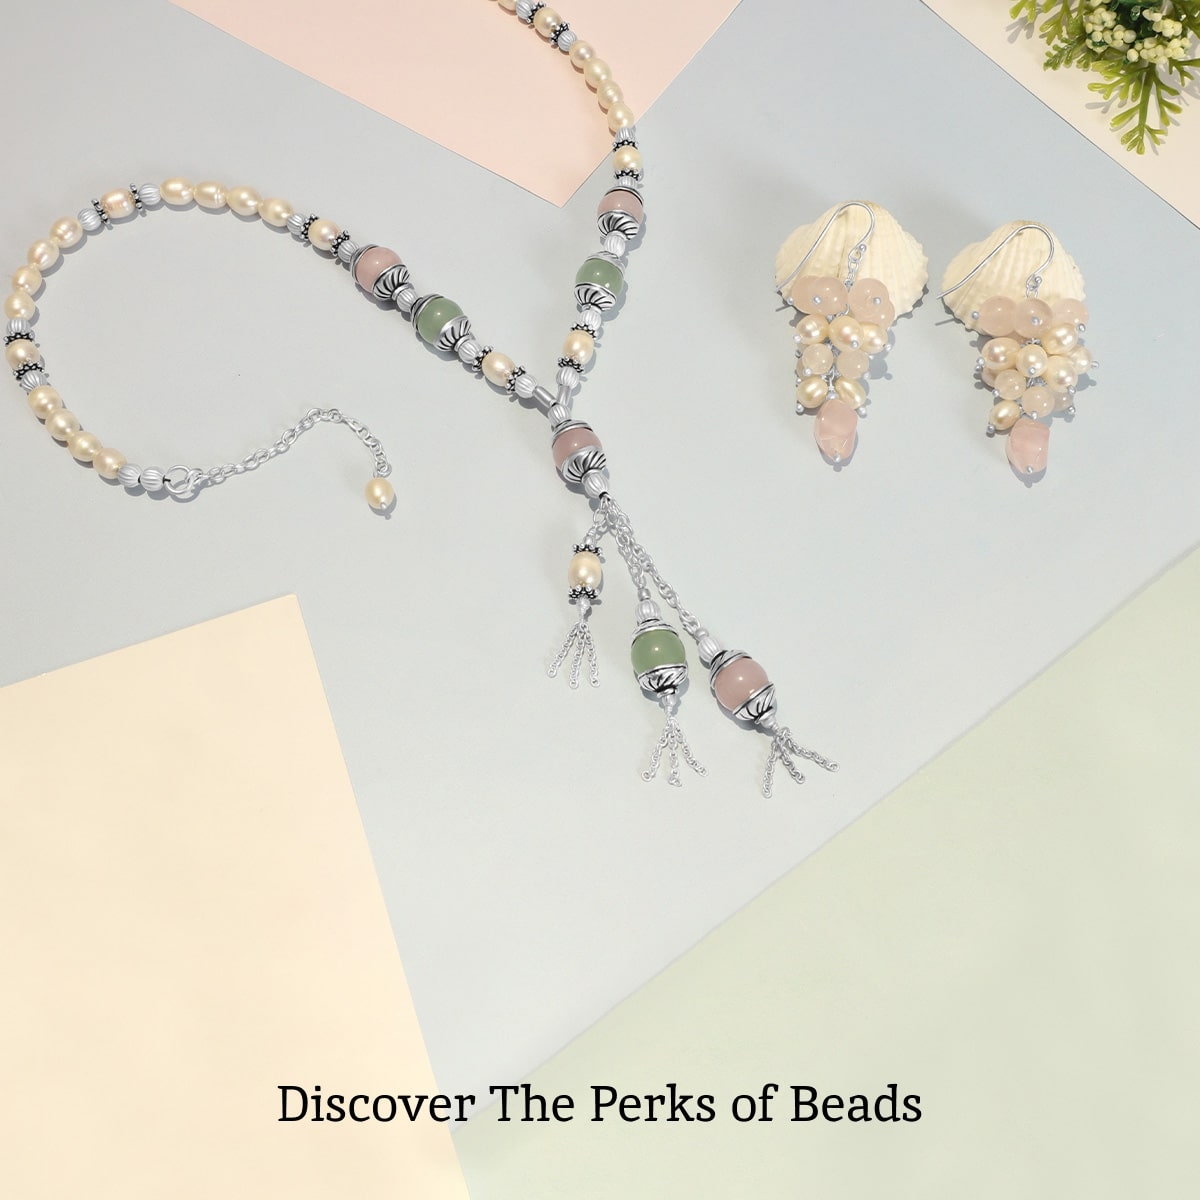 Benefits of Beads Jewelry